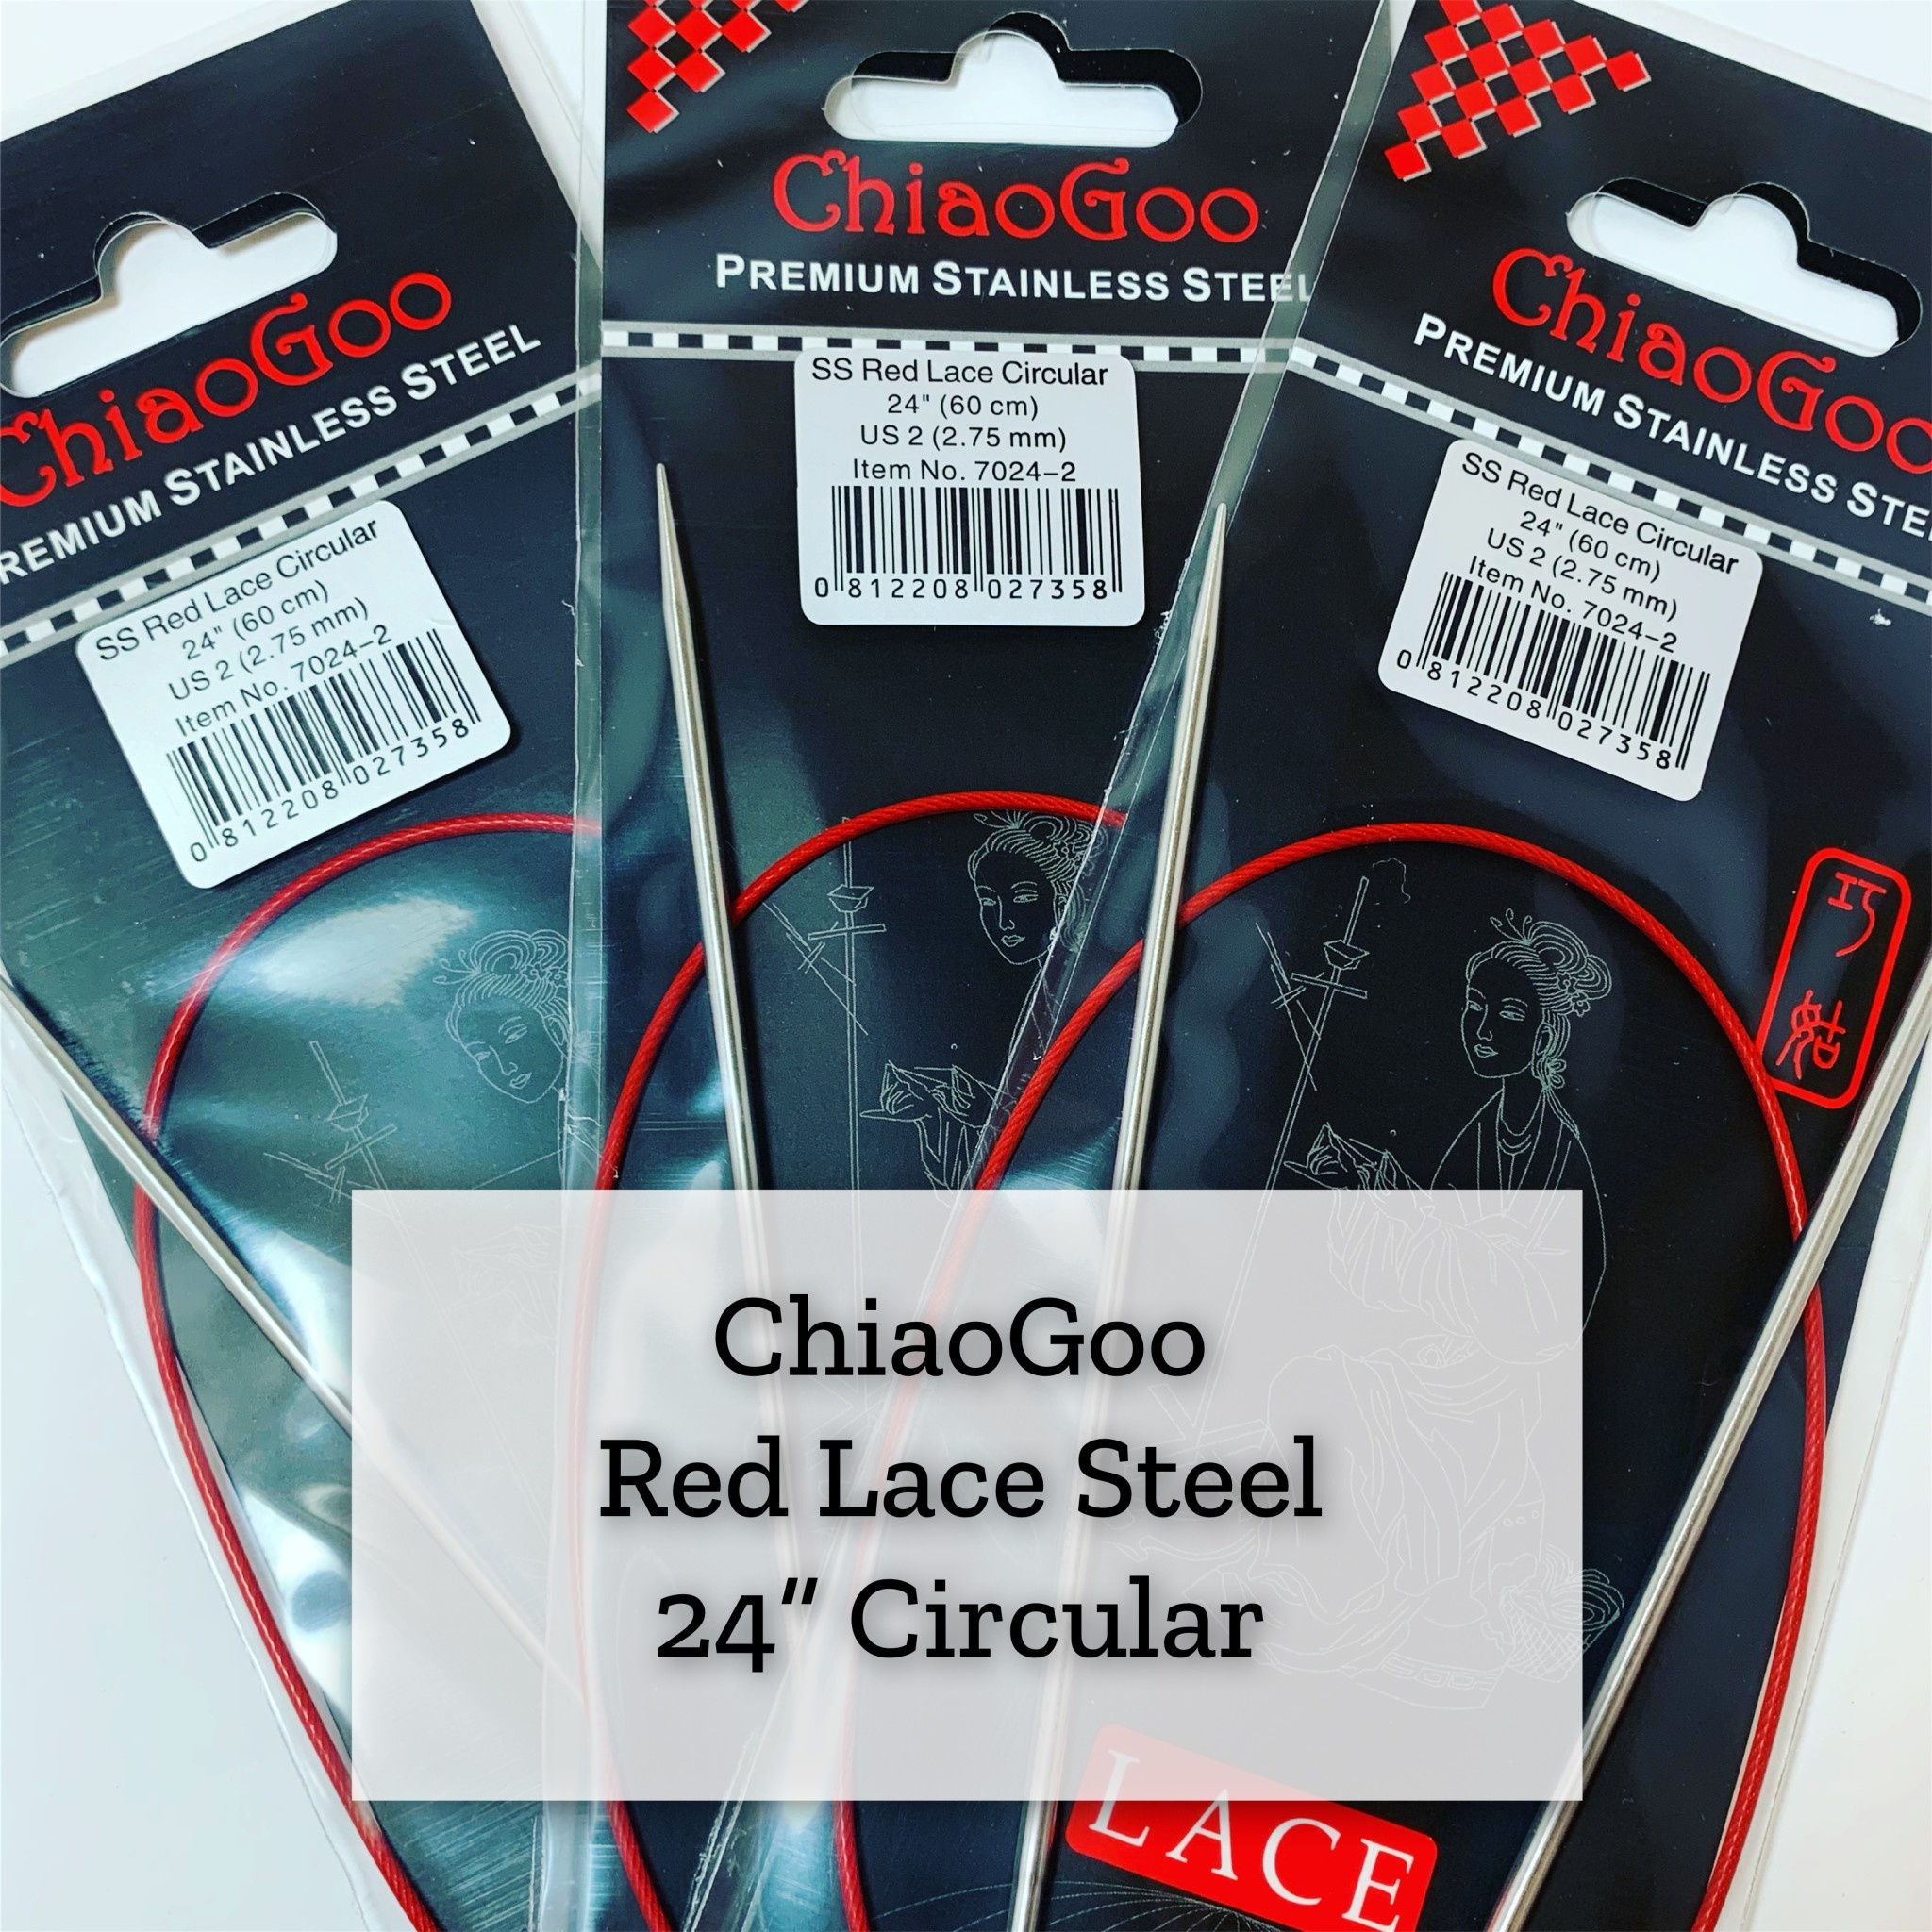 ChiaoGoo Red Lace Steel - 24" 2 mm